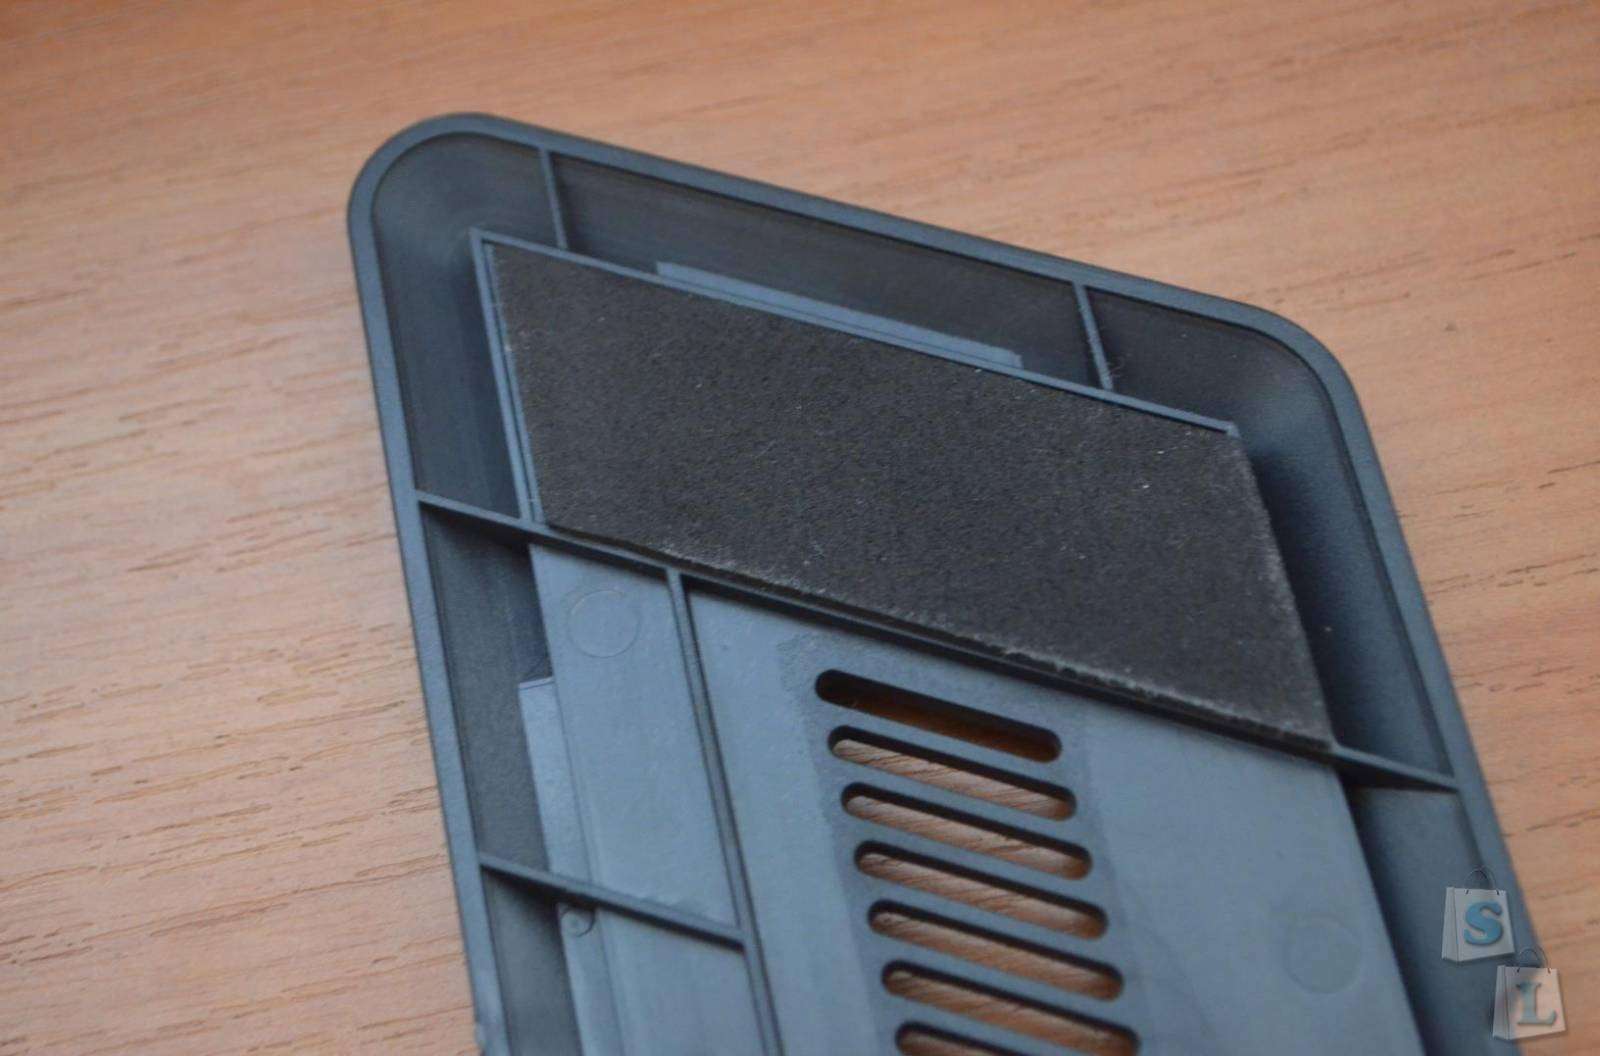 Miniinthebox: Аксессуары для Sony PS4 - подставка и накладки на джойстики